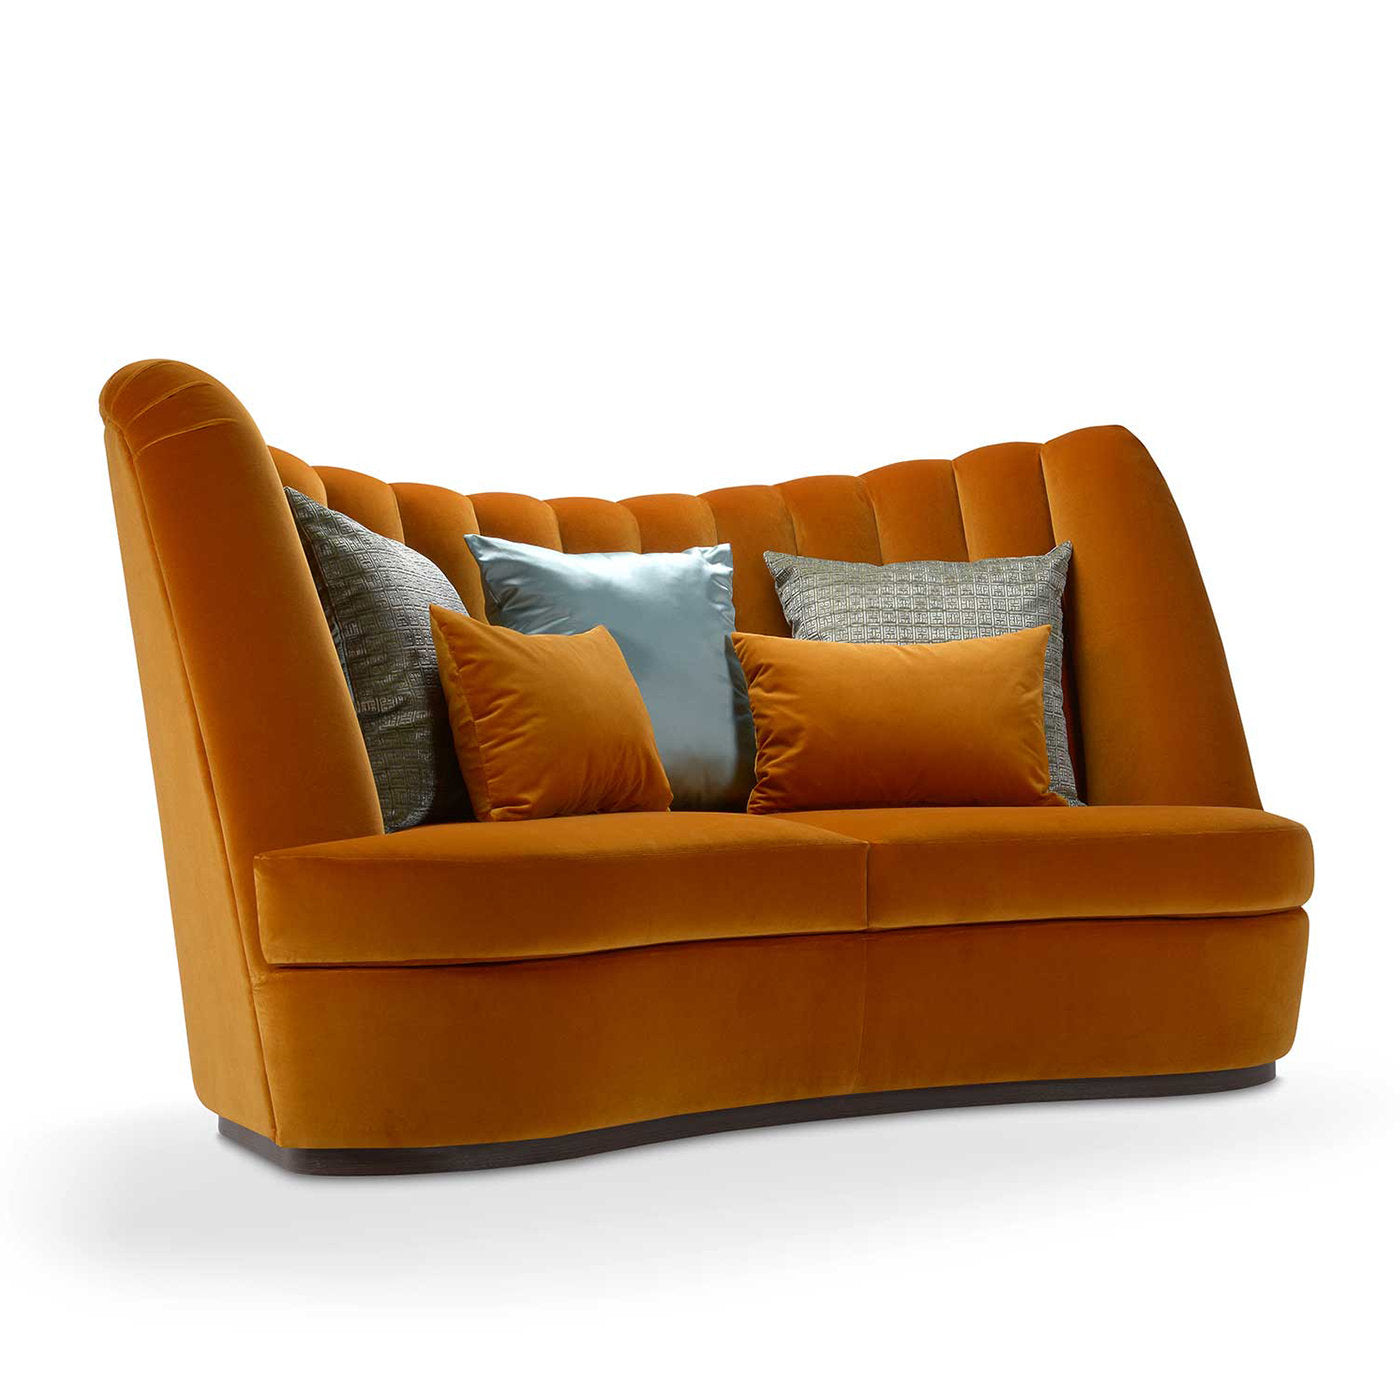 Thalia Saffron 3-Seater Sofa - Alternative view 1